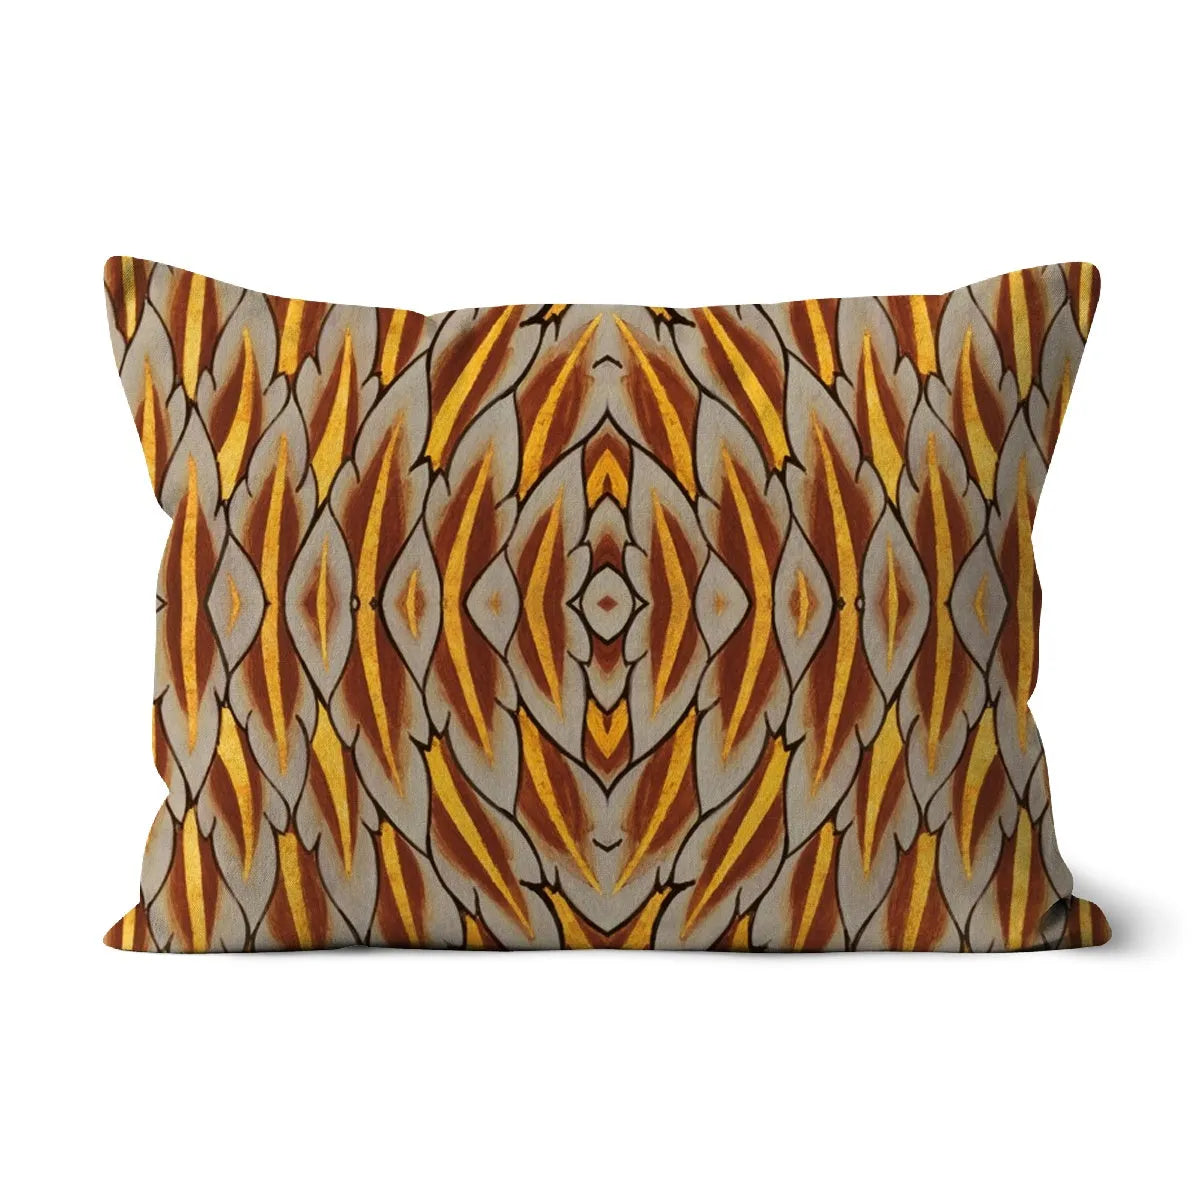 Featherweight Champion Cushion - Decorative Throw Pillow - Throw Pillows - Aesthetic Art